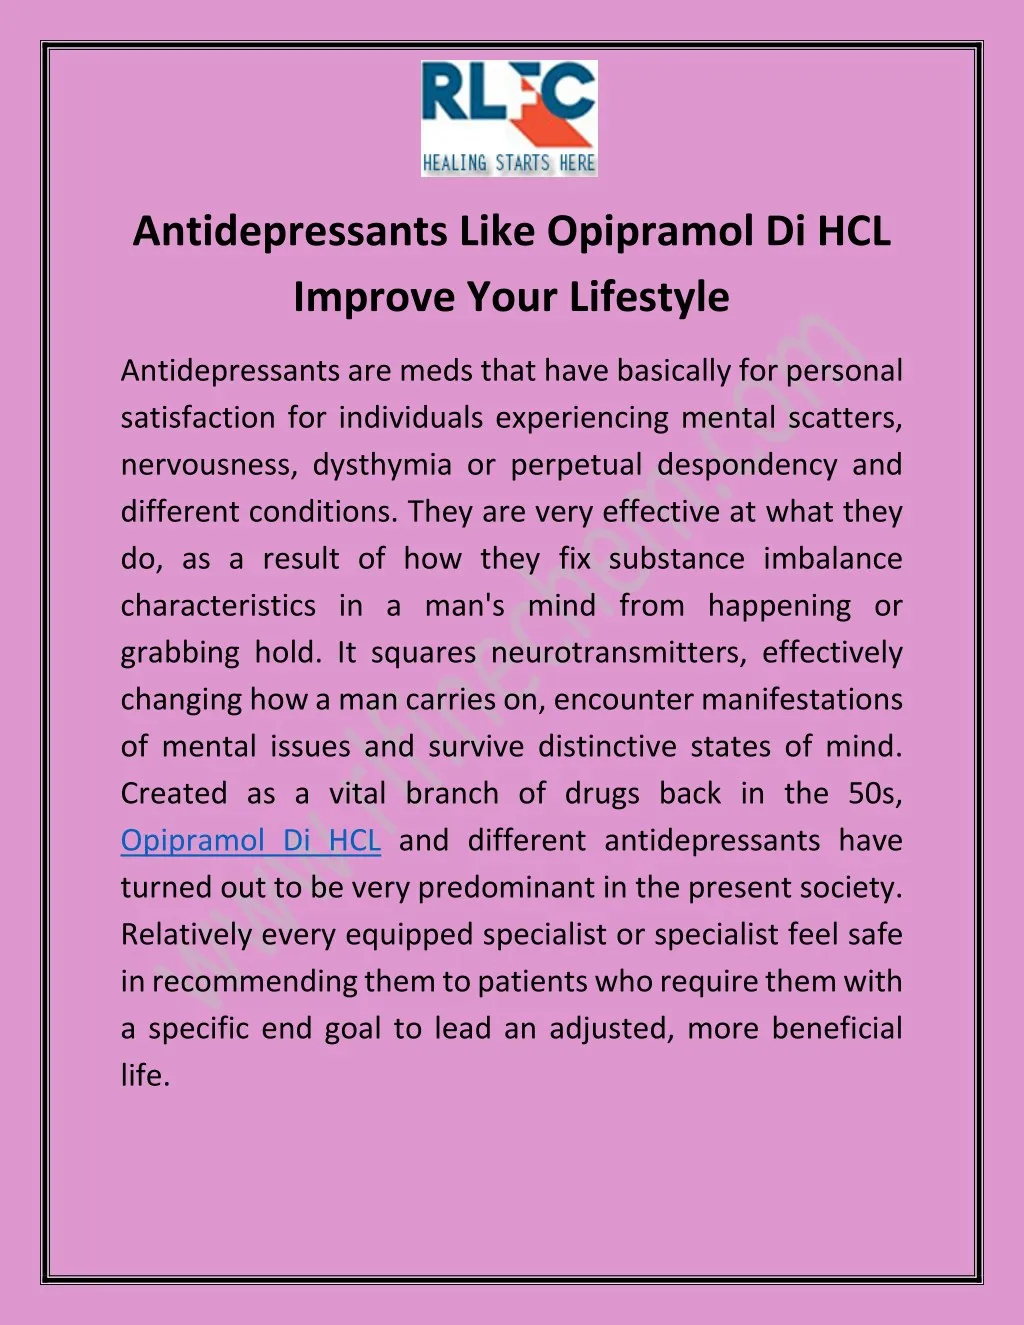 antidepressants like opipramol di hcl improve